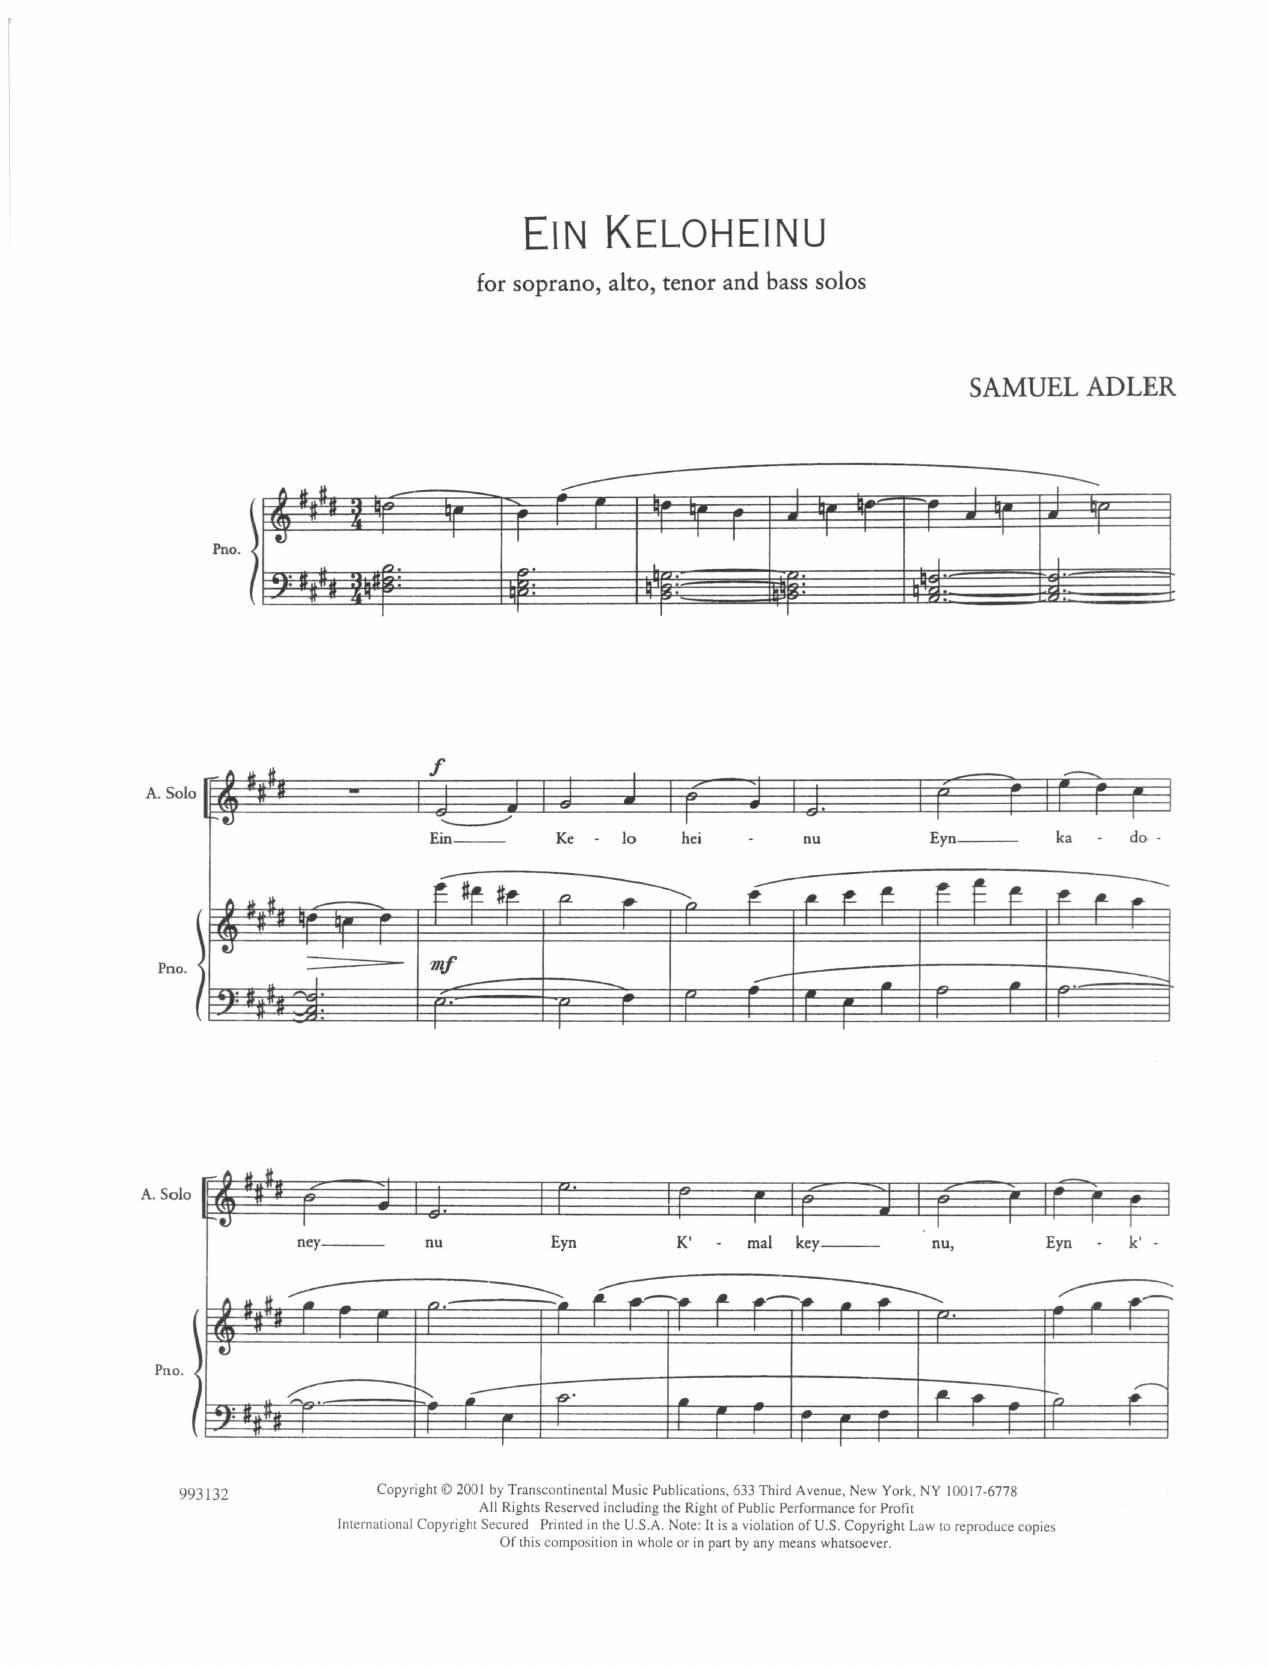 Samuel Adler Five Sephardic Choruses: Ein Keloheinu Sheet Music Notes & Chords for SATB - Download or Print PDF